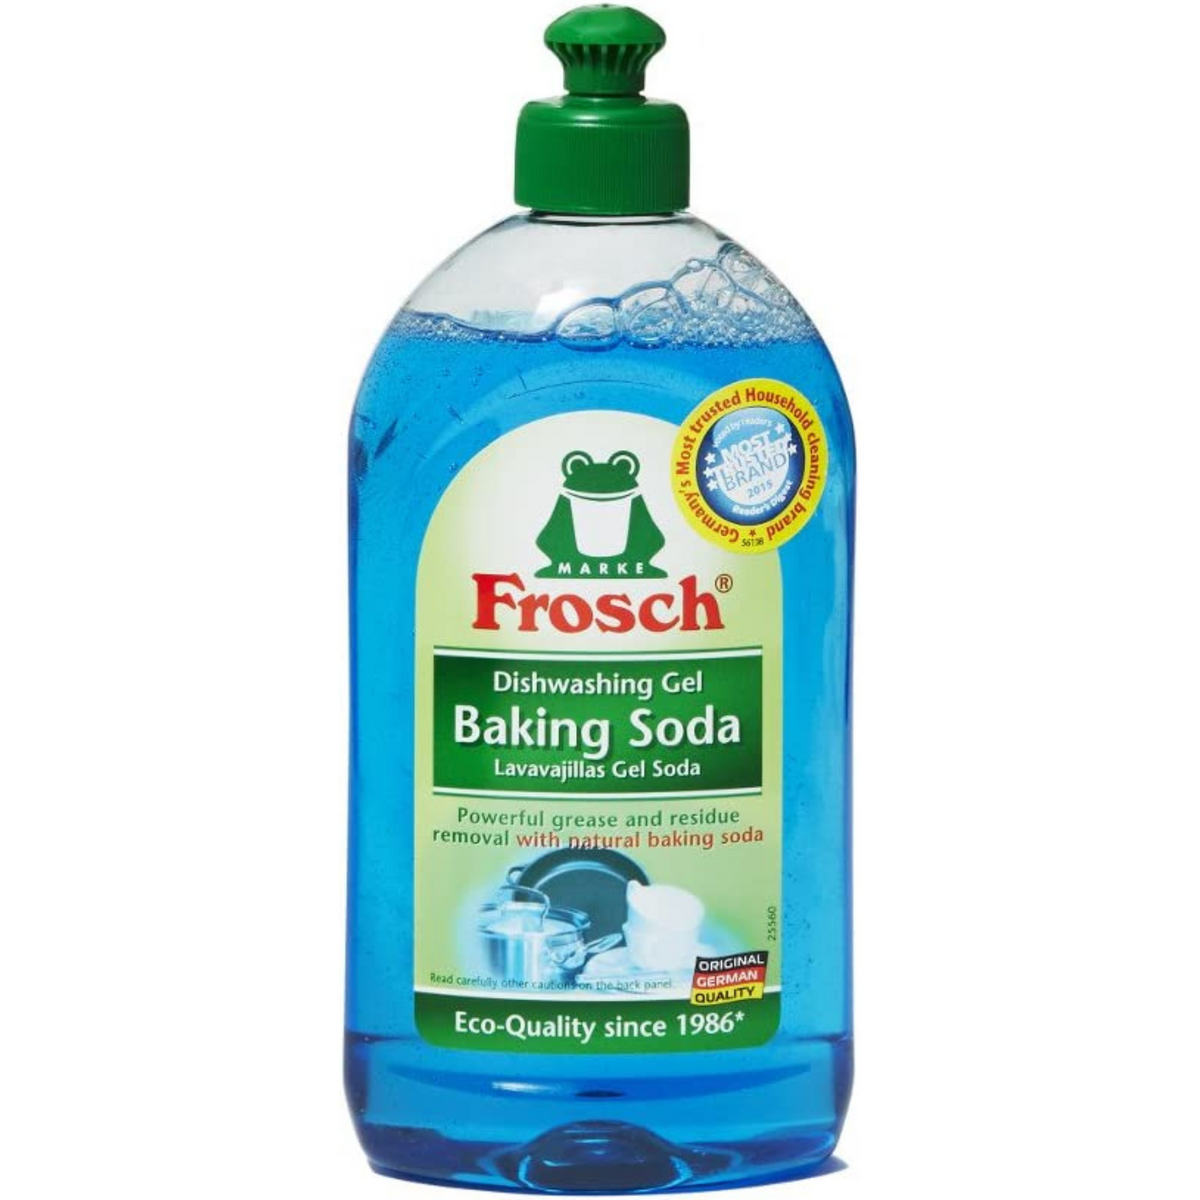 Primary Image of Frosch Baking Soda Liquid Dish Soap (500 ml) 